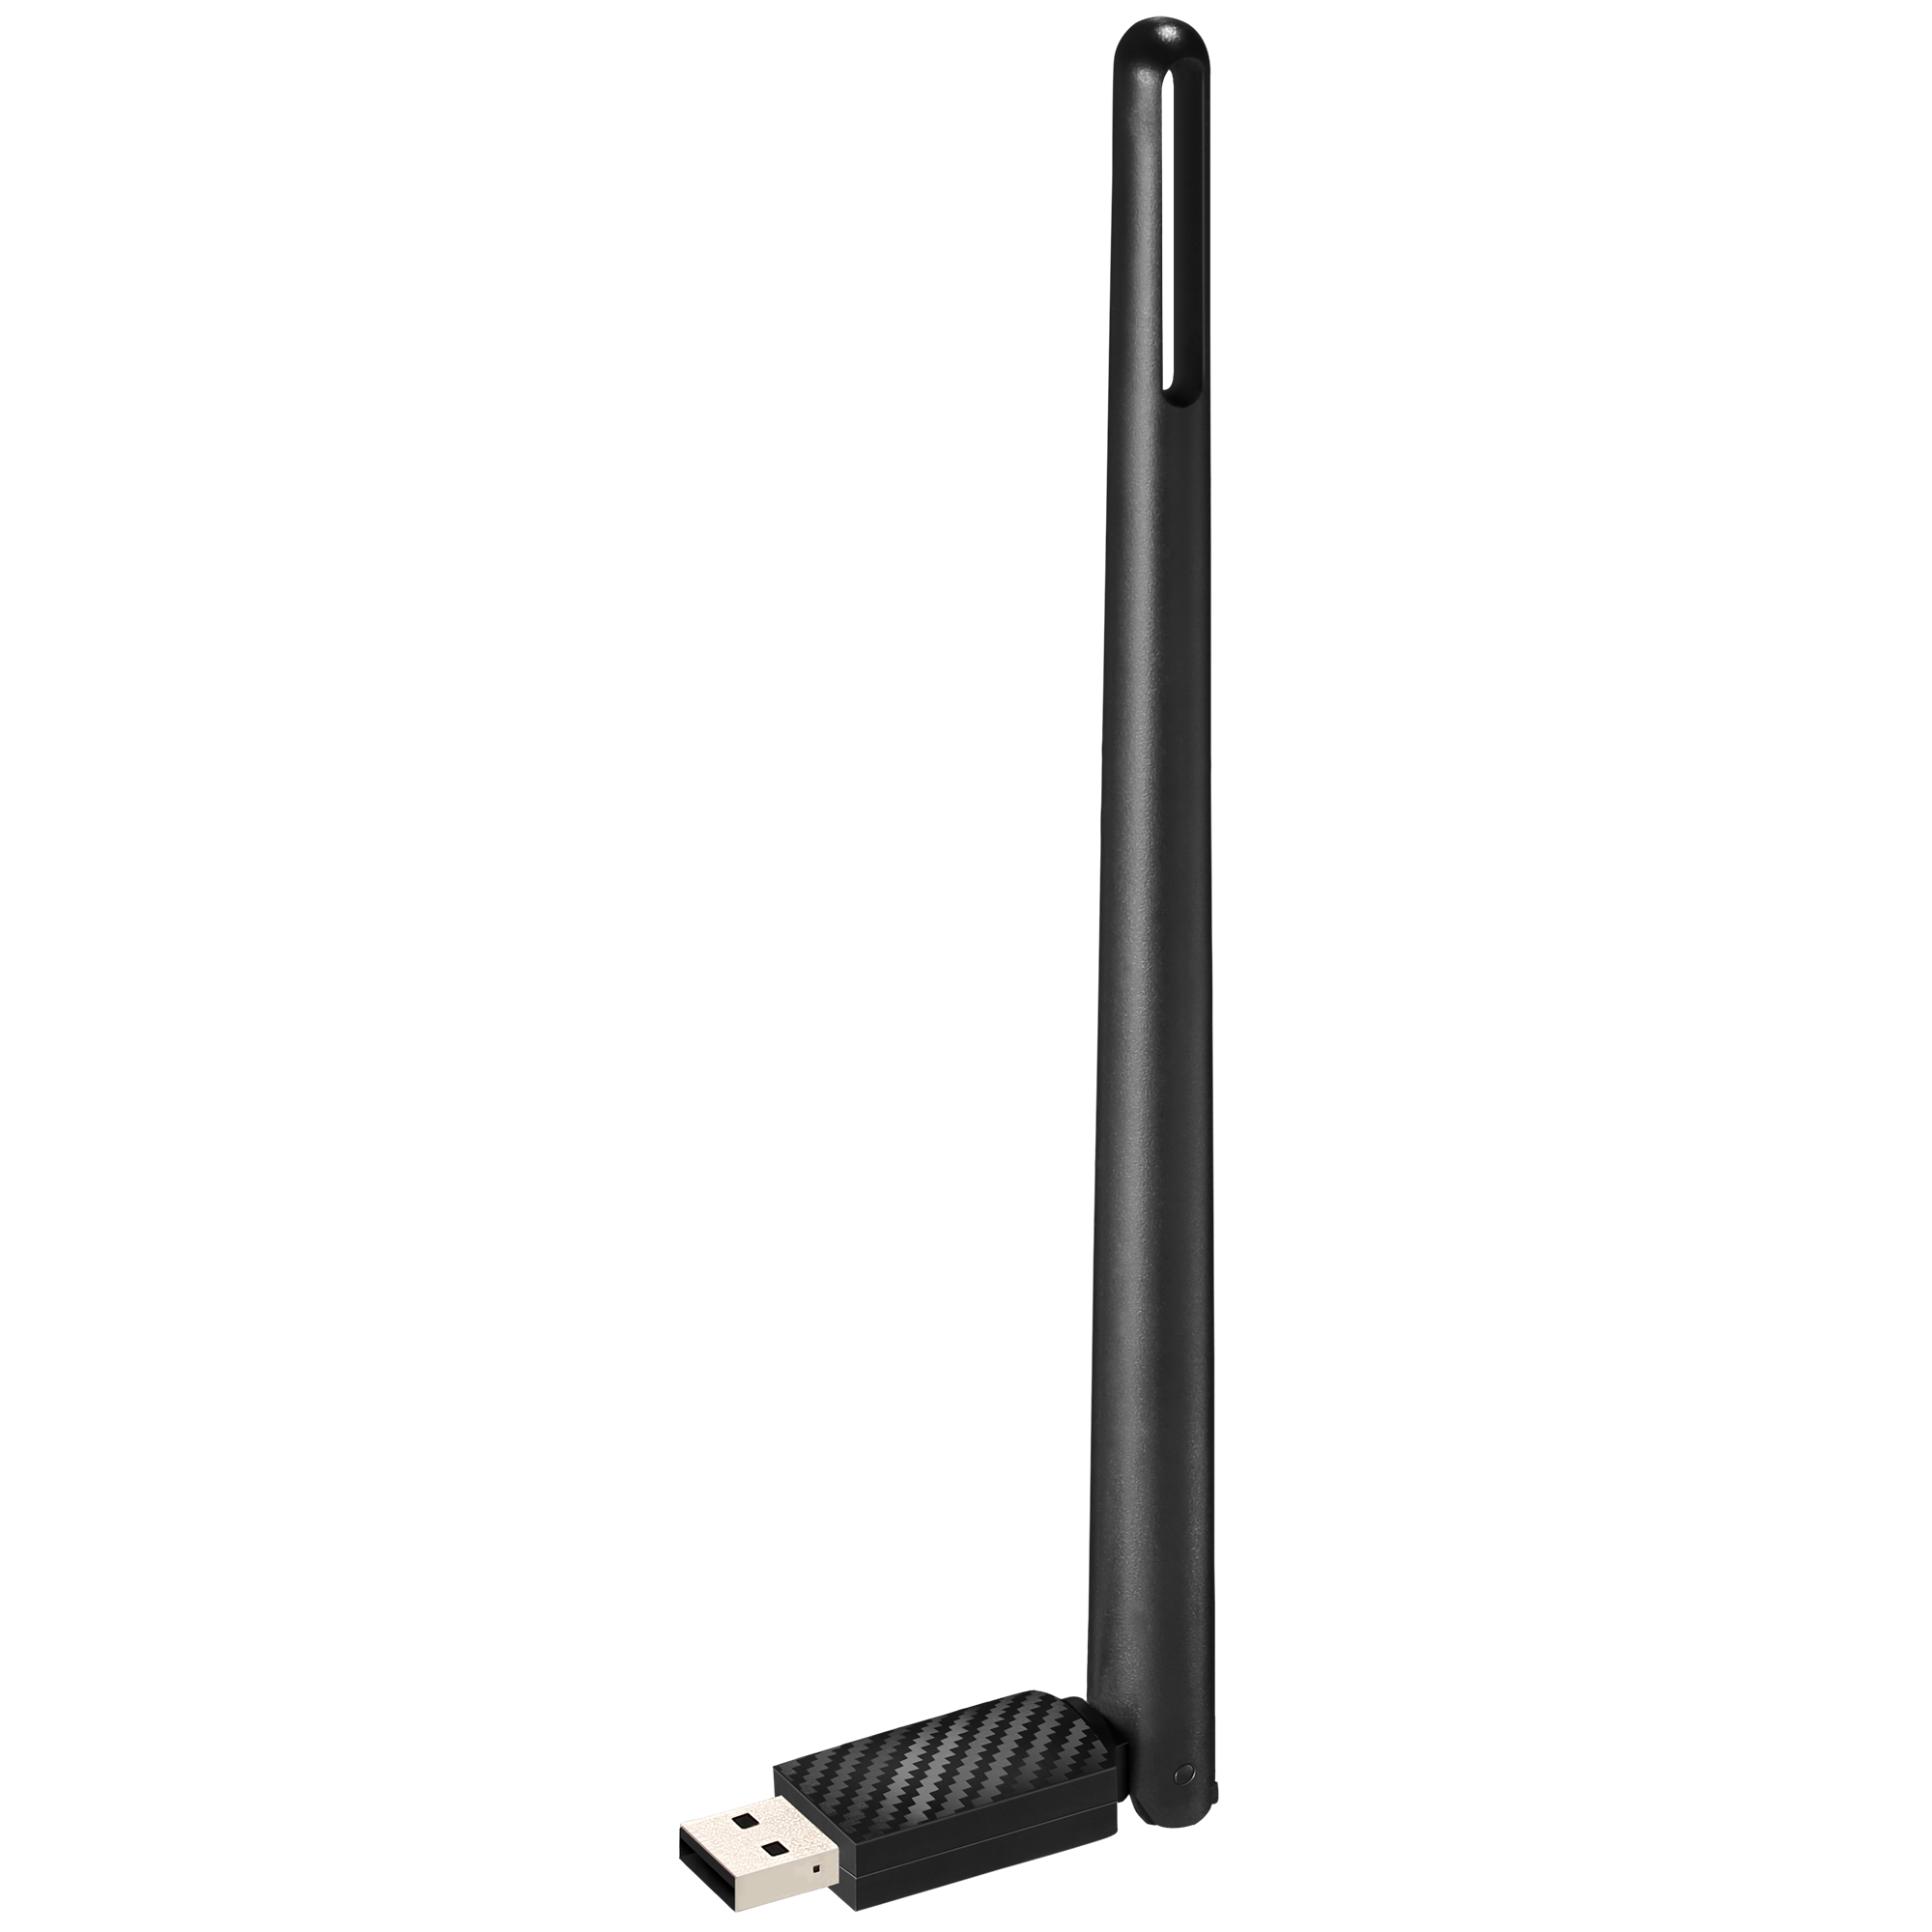 TOTOLINK-A650UA AC650 11AC Dual Band USB WiFi Adapter WLAN Card